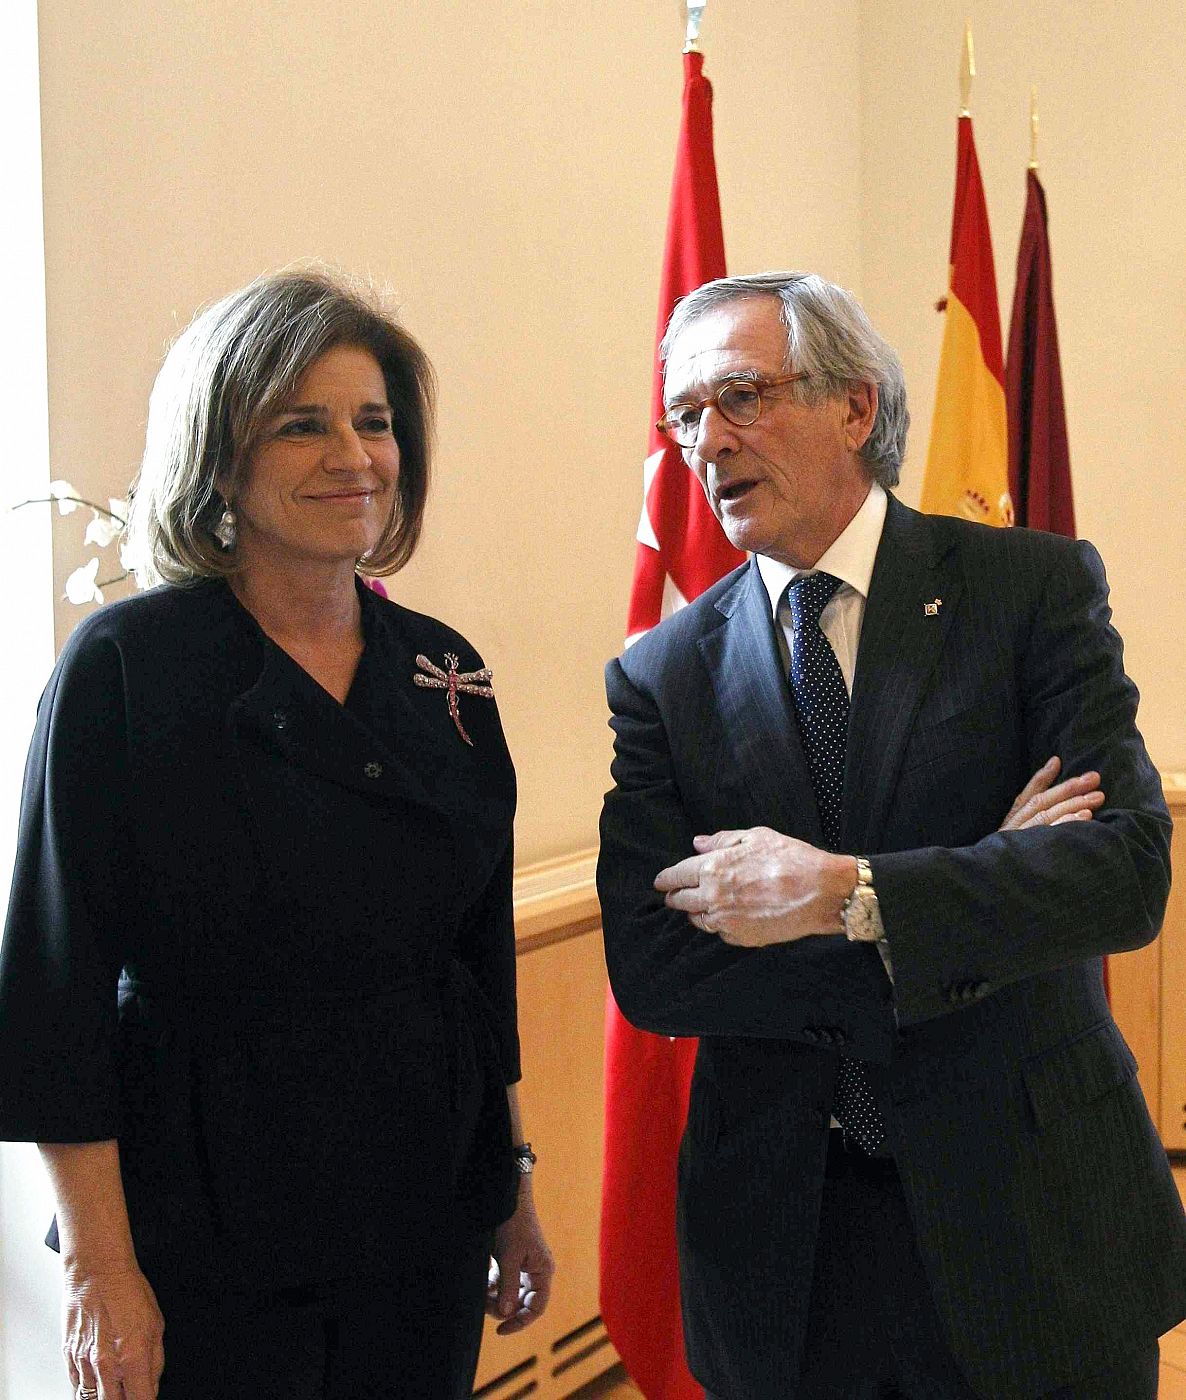 La alcaldesa de Madrid, Ana Botella, junto al alcalde de Barcelona, Xavier Trias